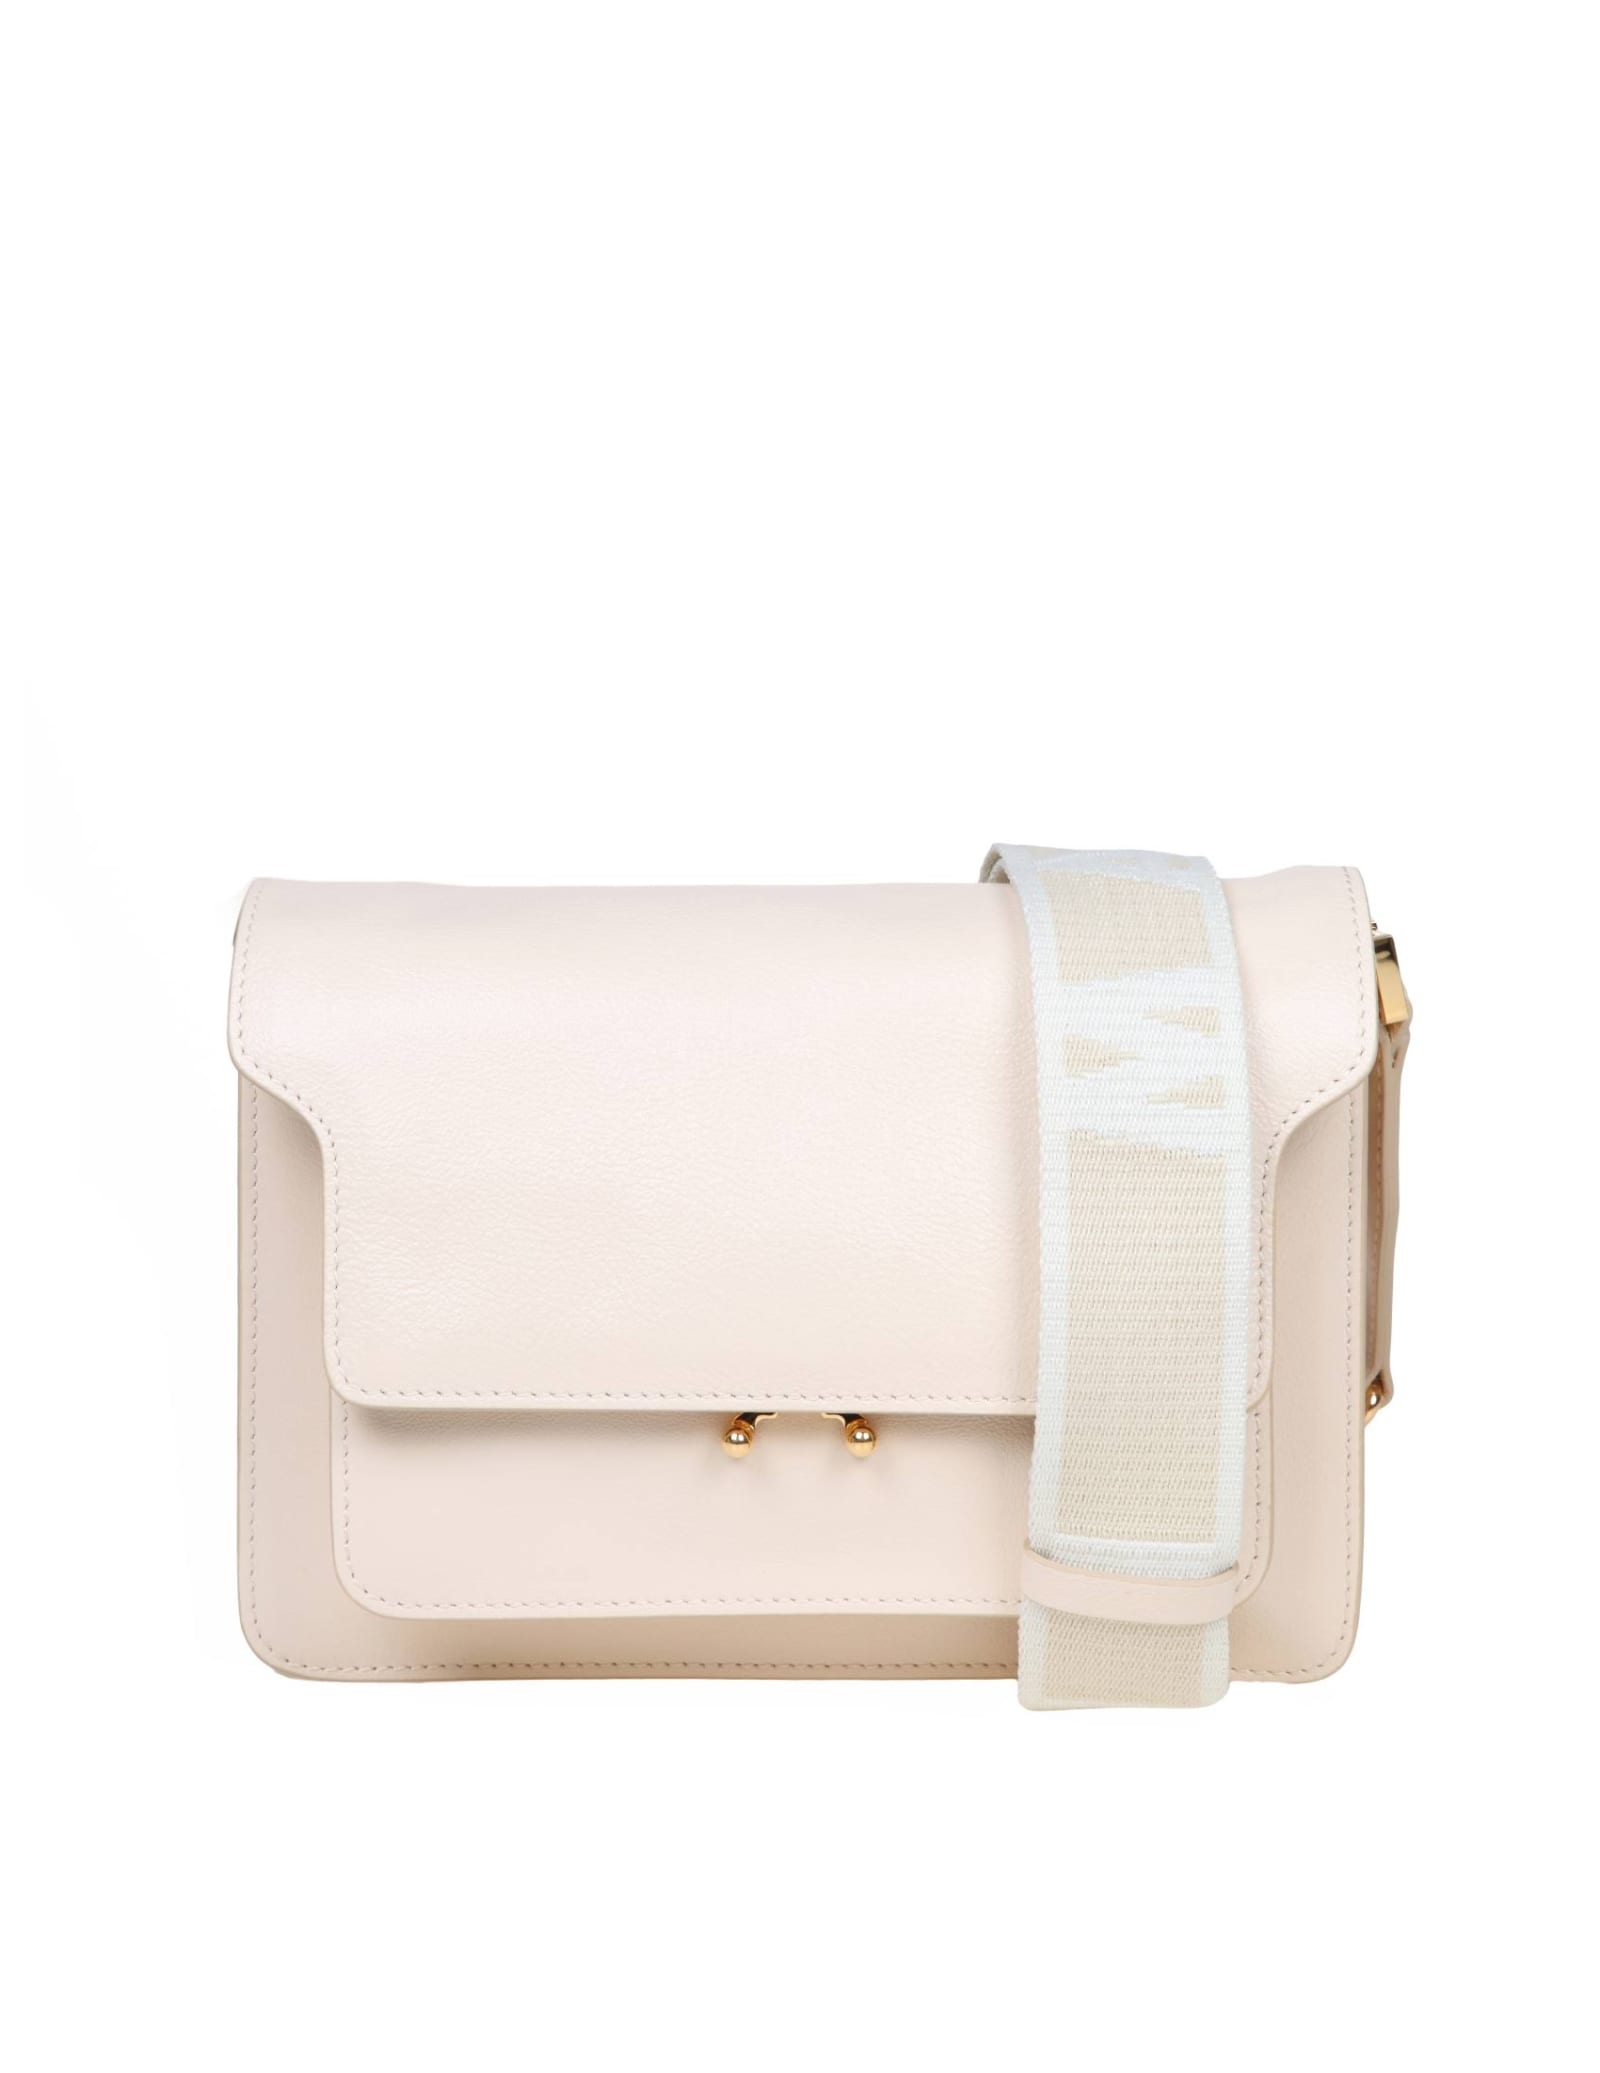 Marni Trunk Soft Shoulder Bag In Cream Color Leather